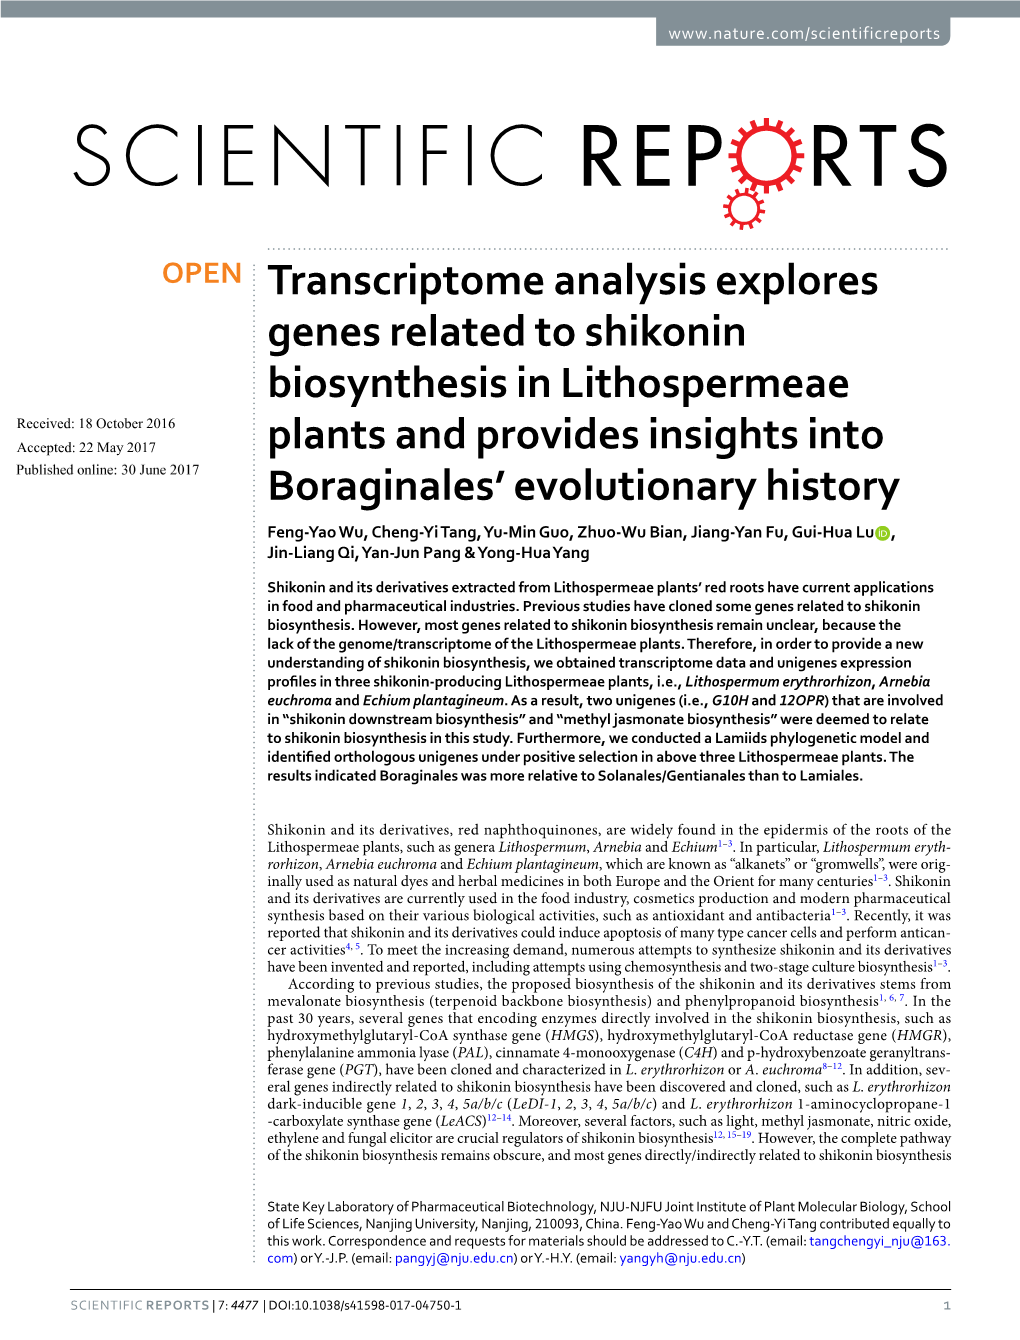 Transcriptome Analysis Explores Genes Related to Shikonin